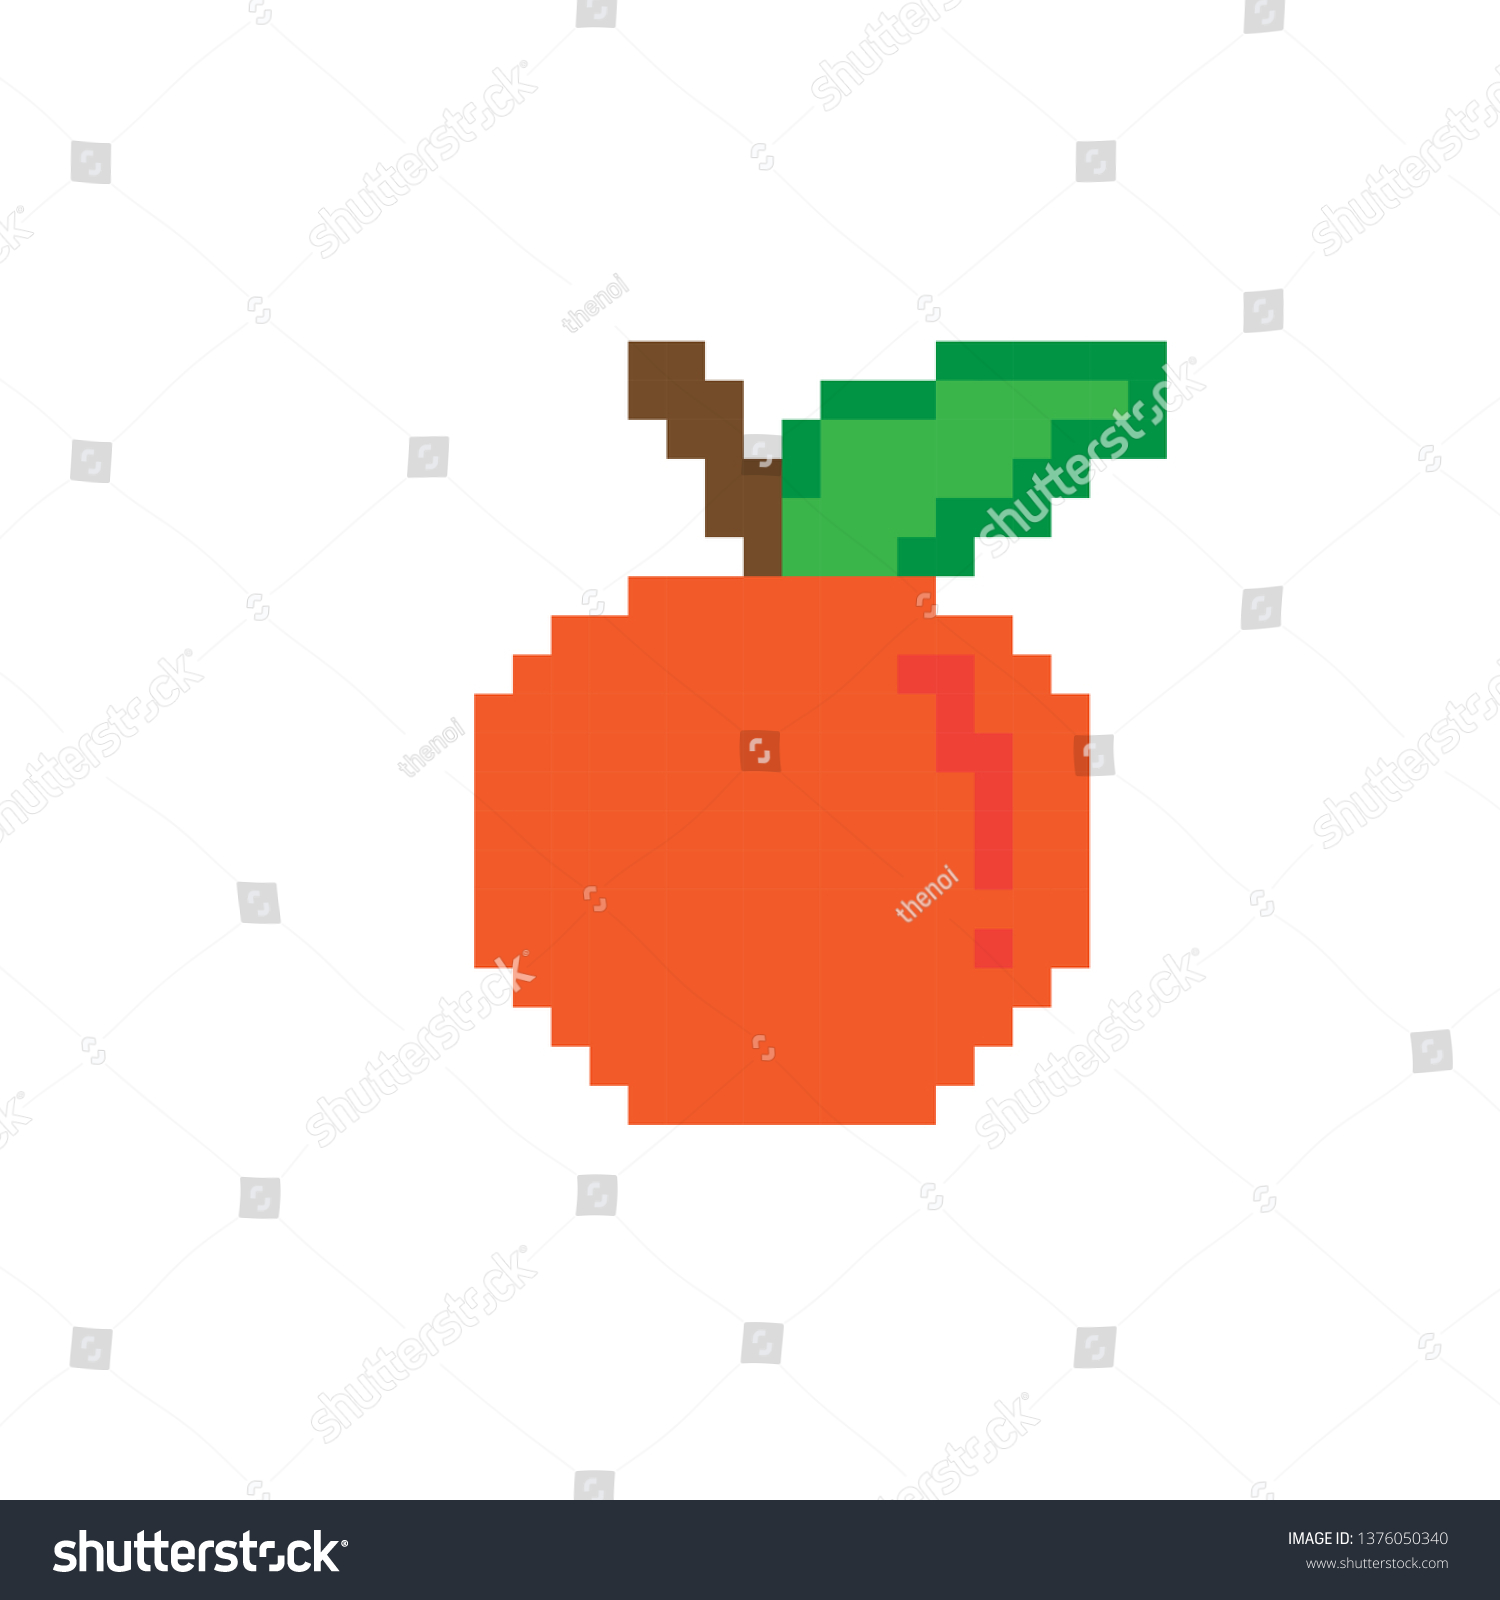 vector orange pixel art - Royalty Free Stock Vector 1376050340 - Avopix.com